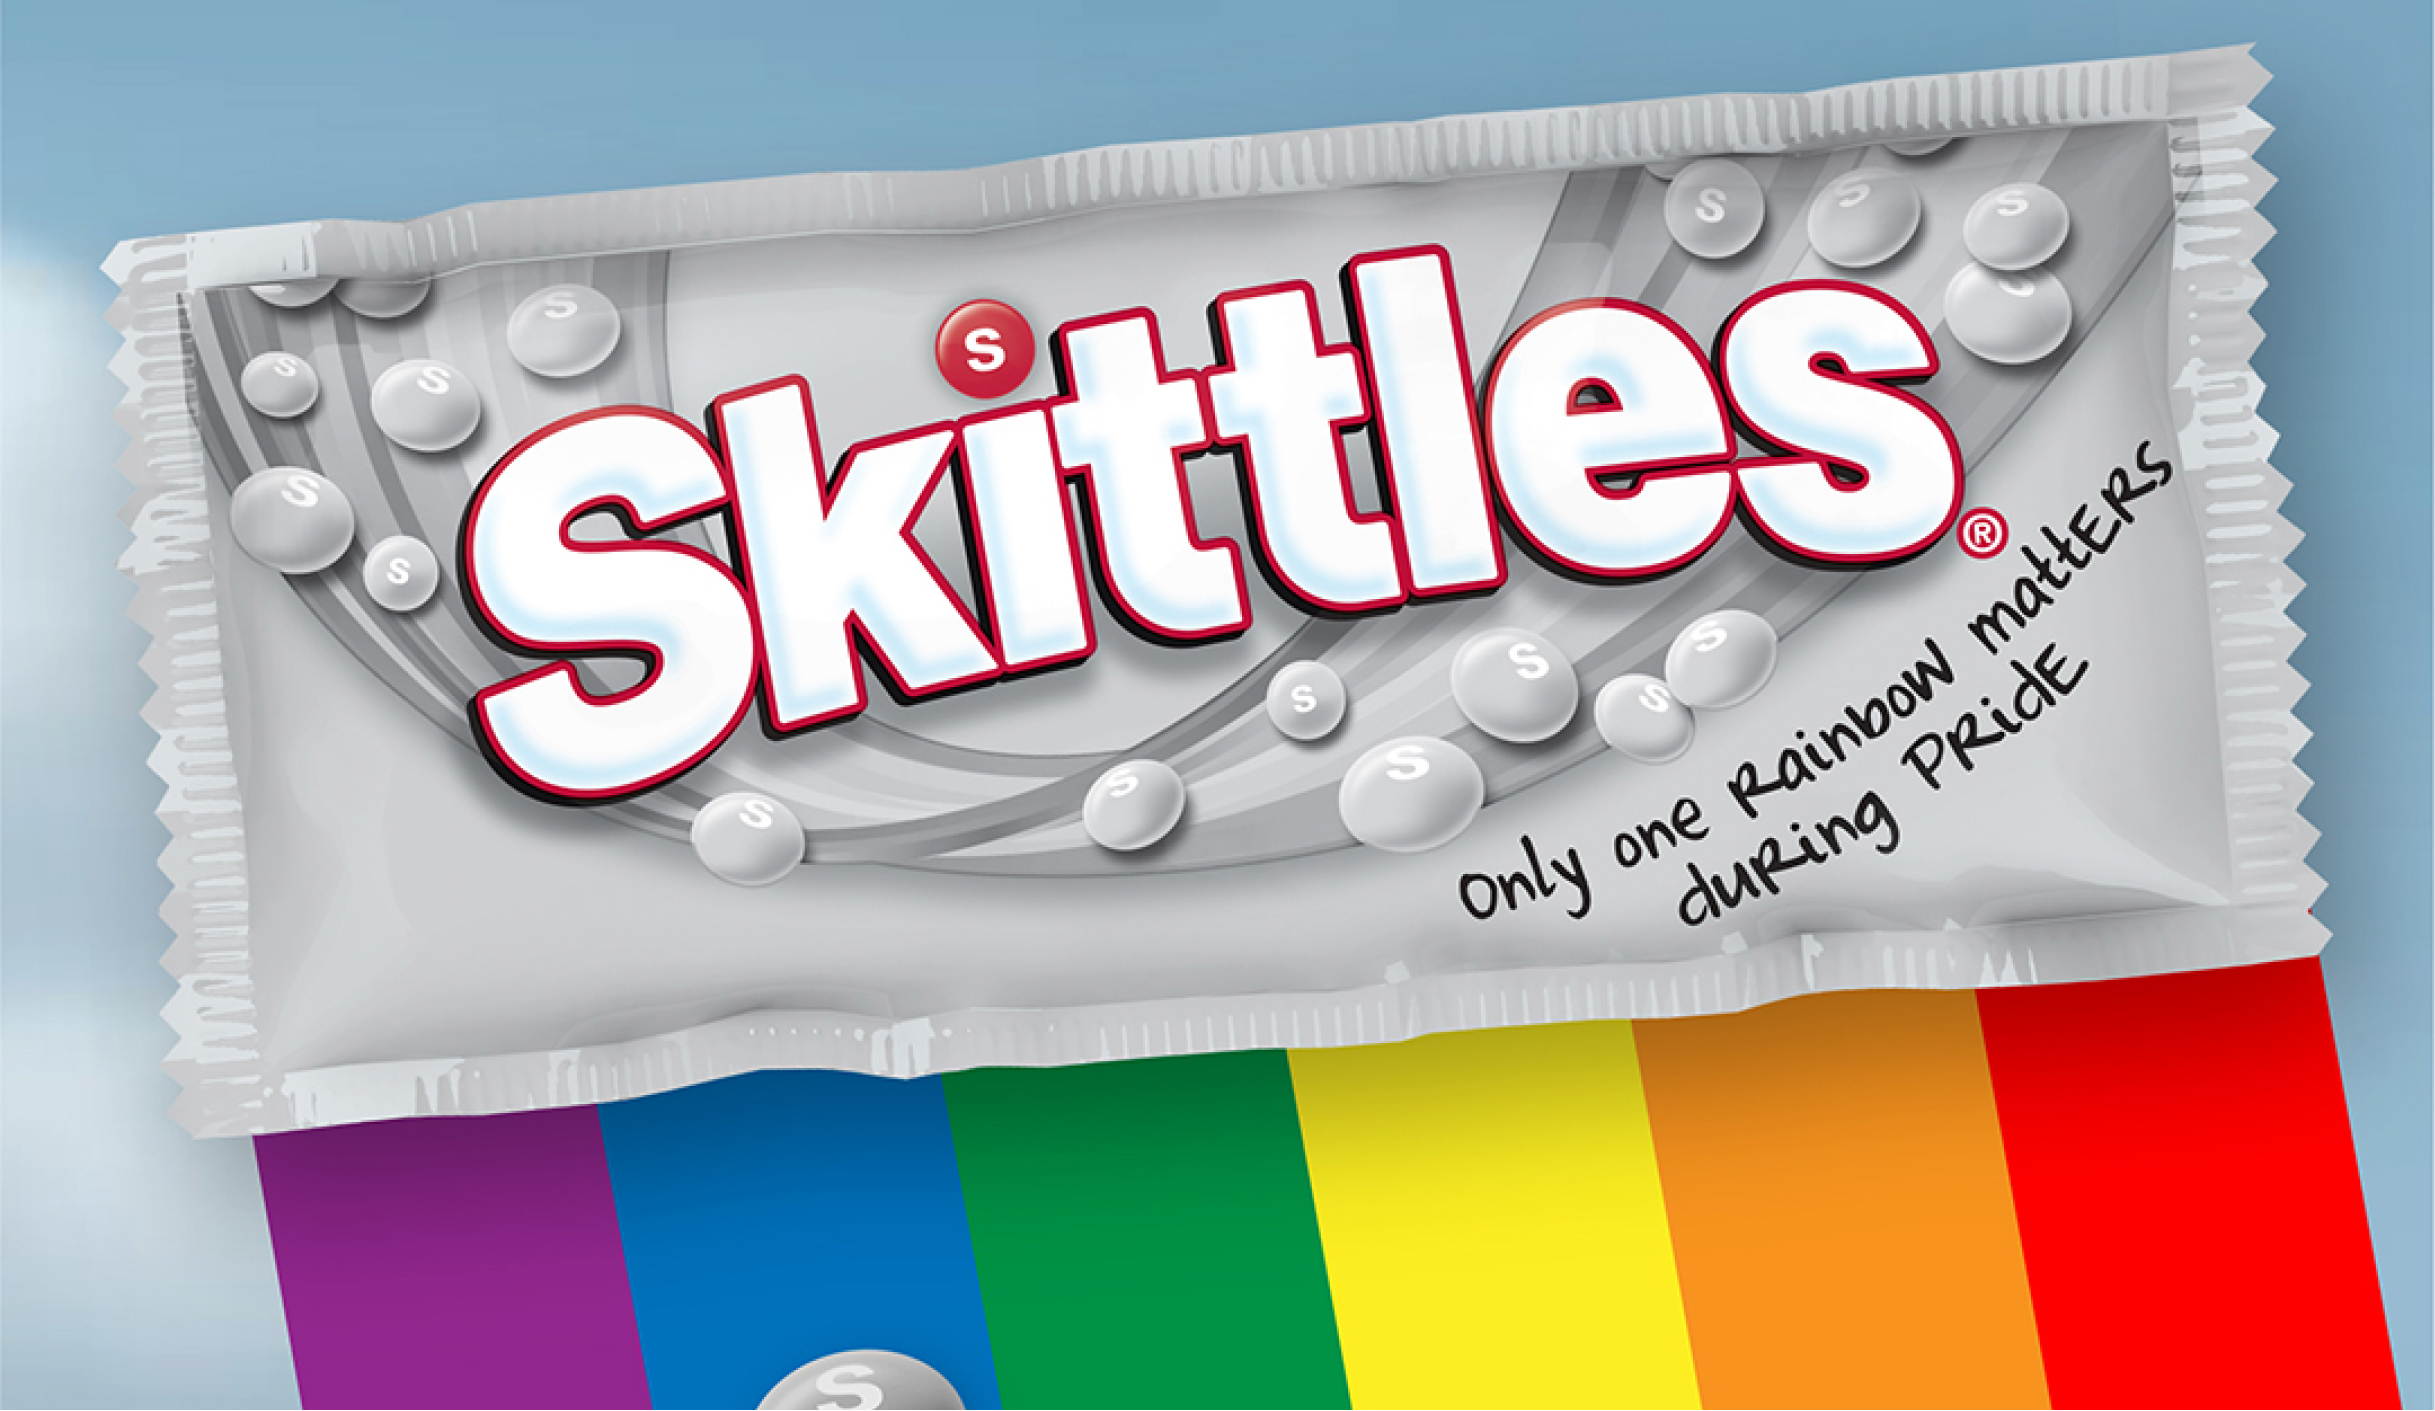 Single skittles pride pack with rainbow underneath